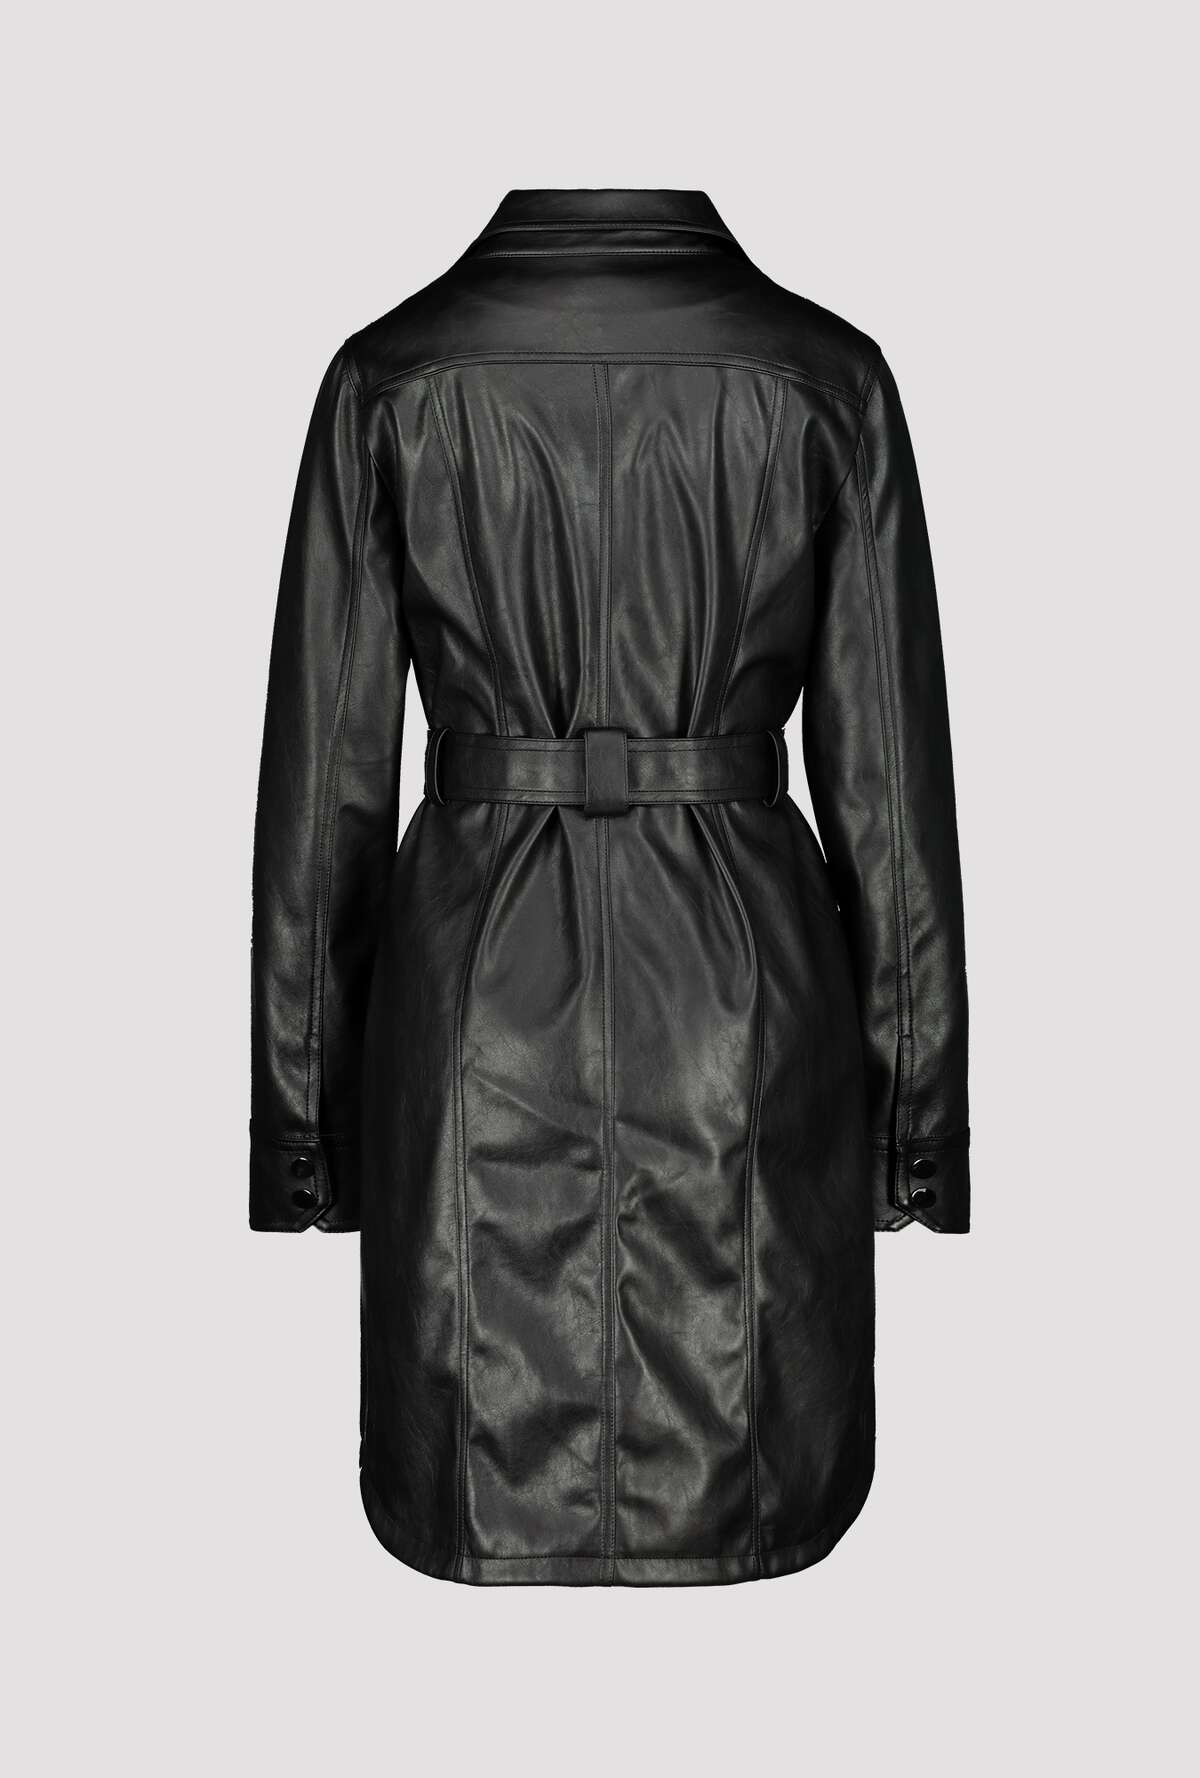 Monari Indoor Lederimitat Mantel mit aufgesetzten Taschen mode | weber